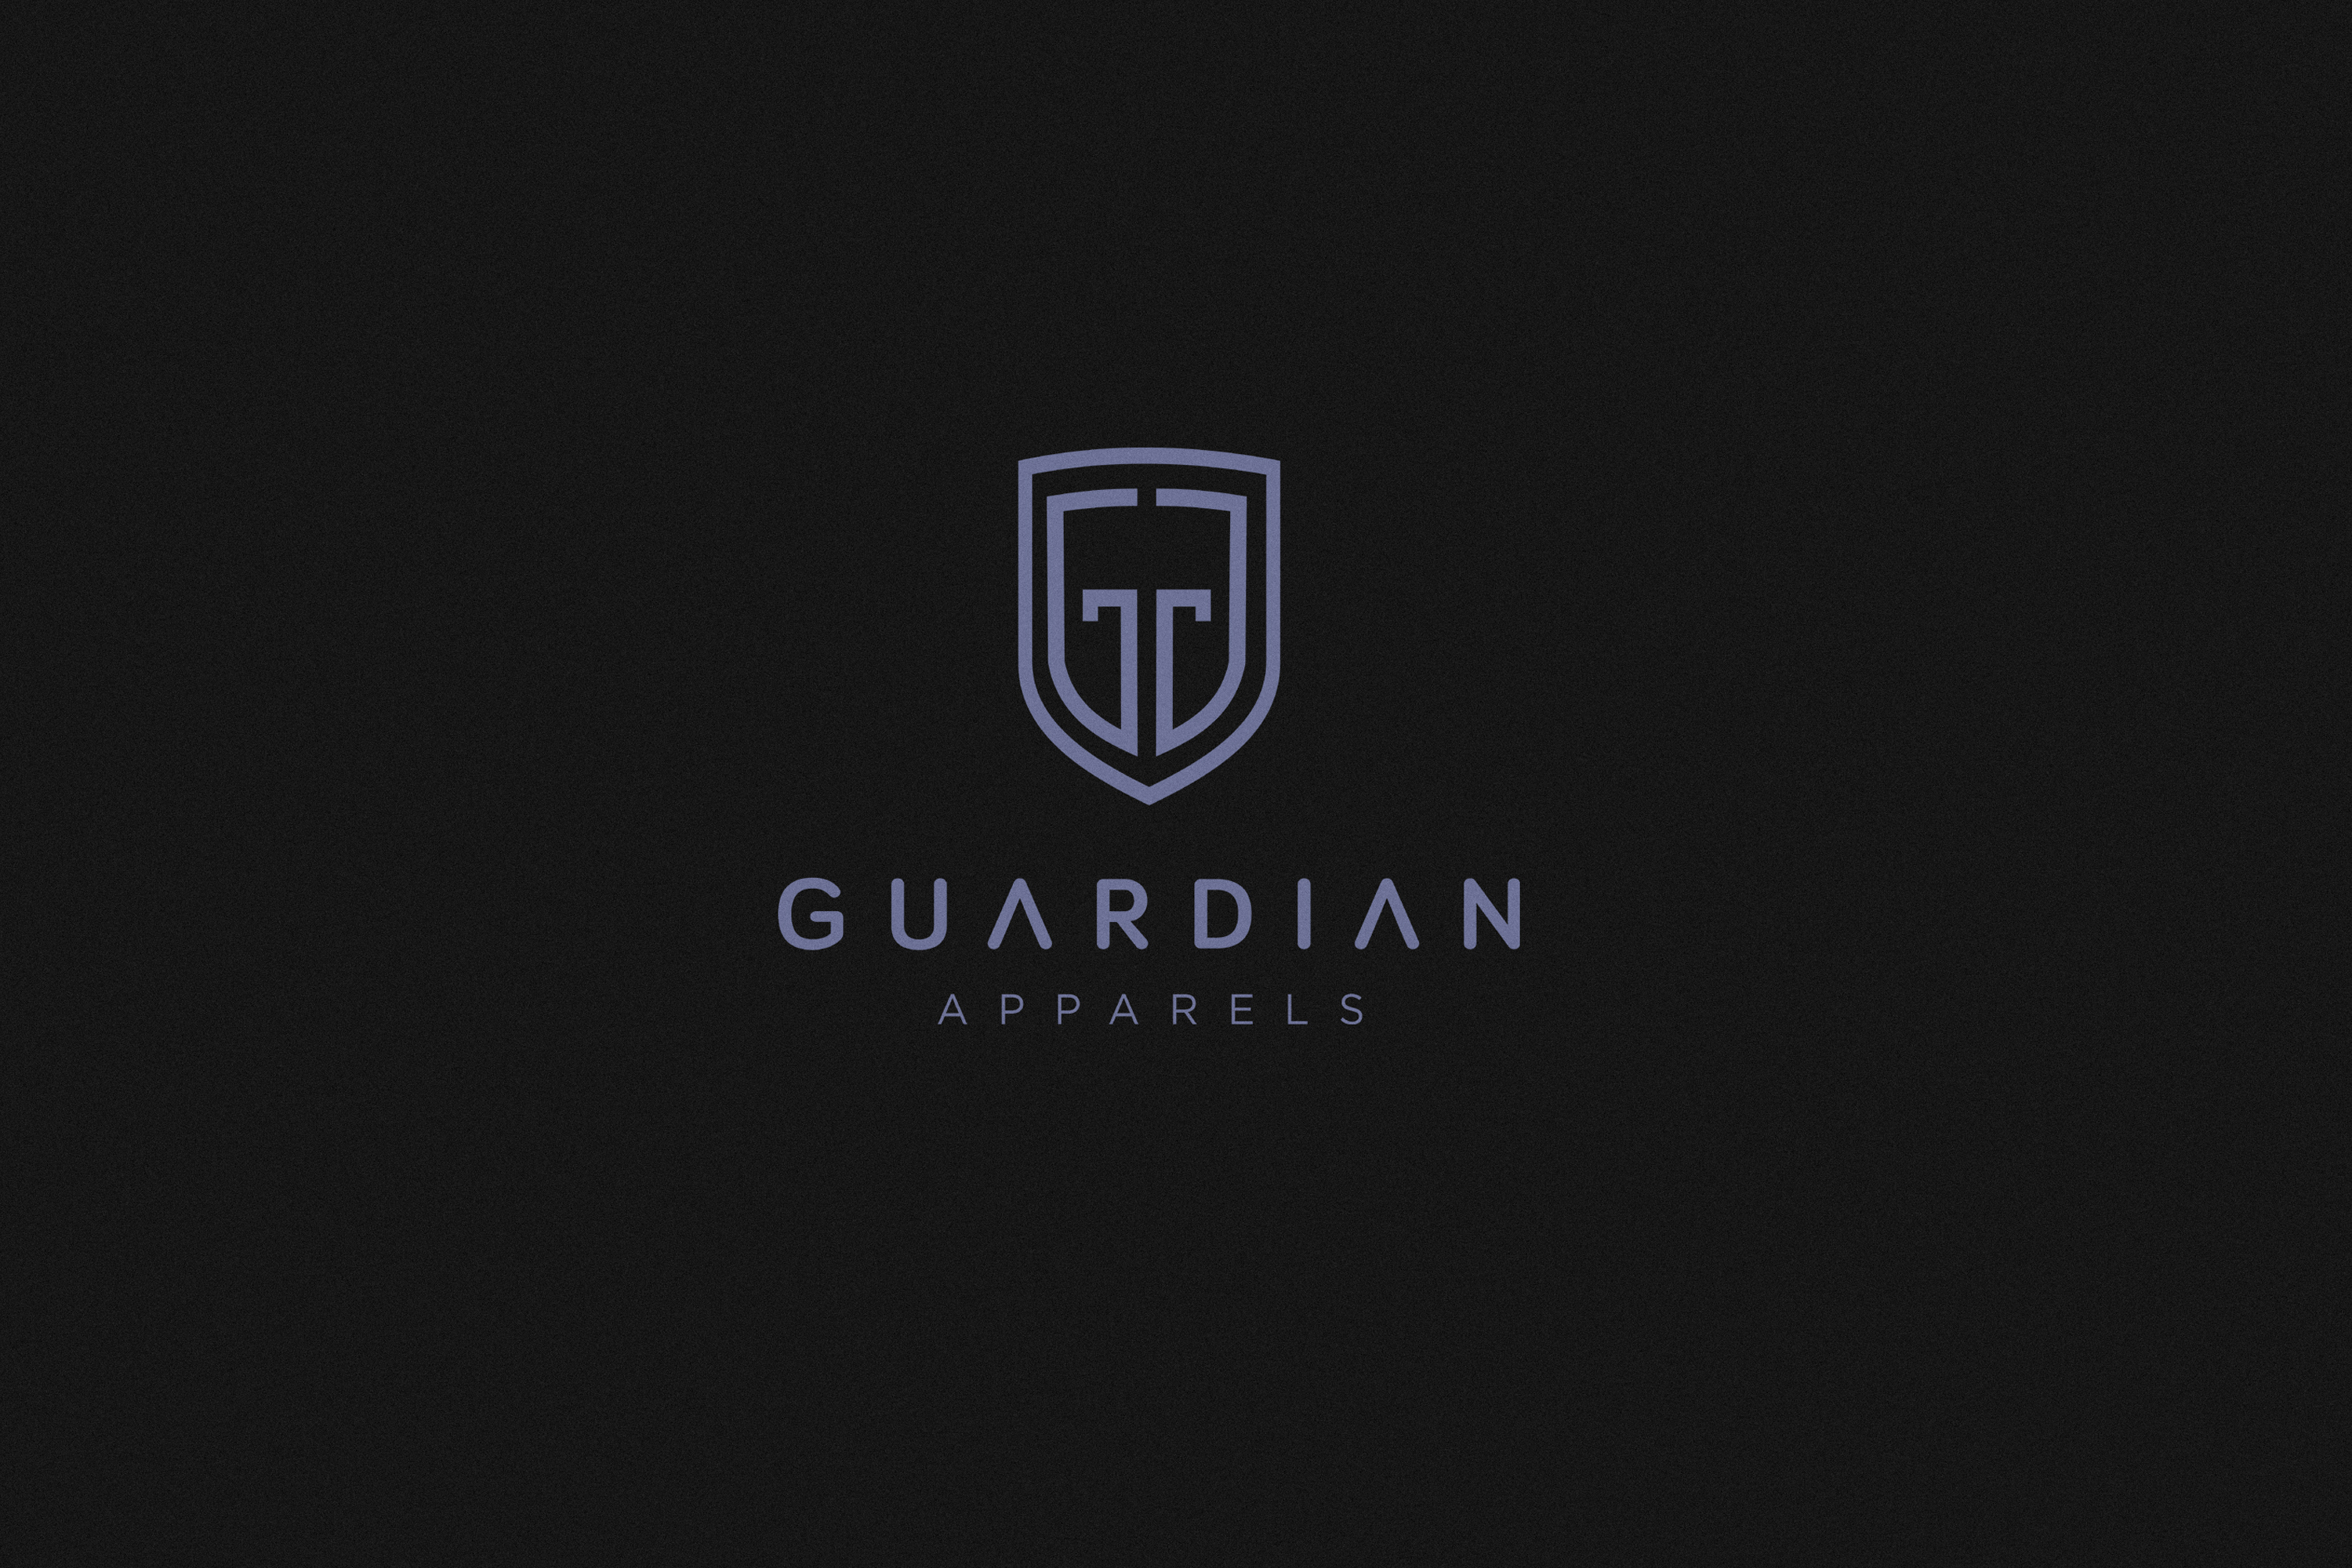  logo guardian